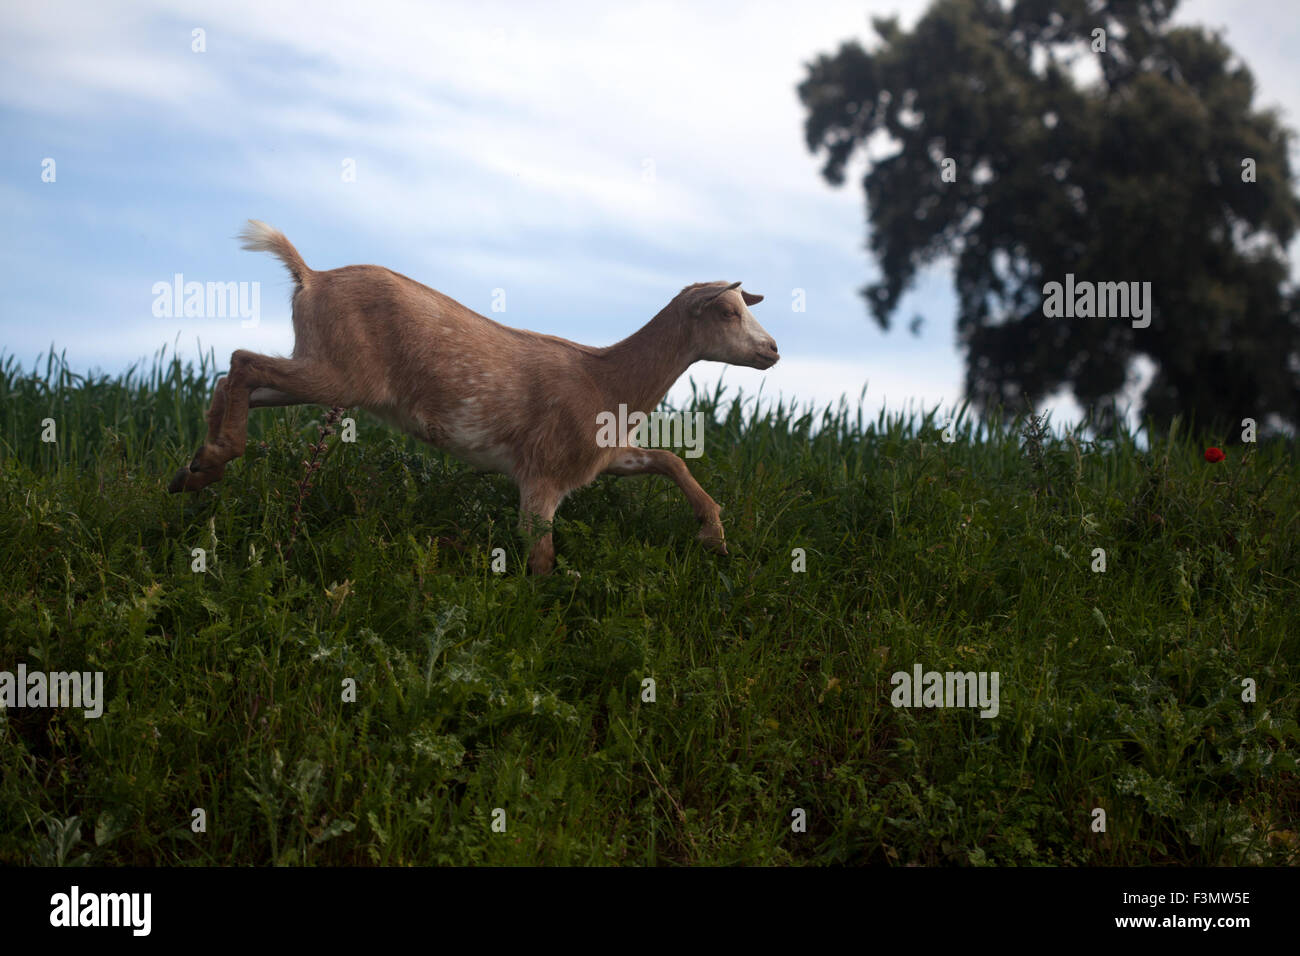 A goat walks near a monoculture field of genetically modified wheat Stock Photo